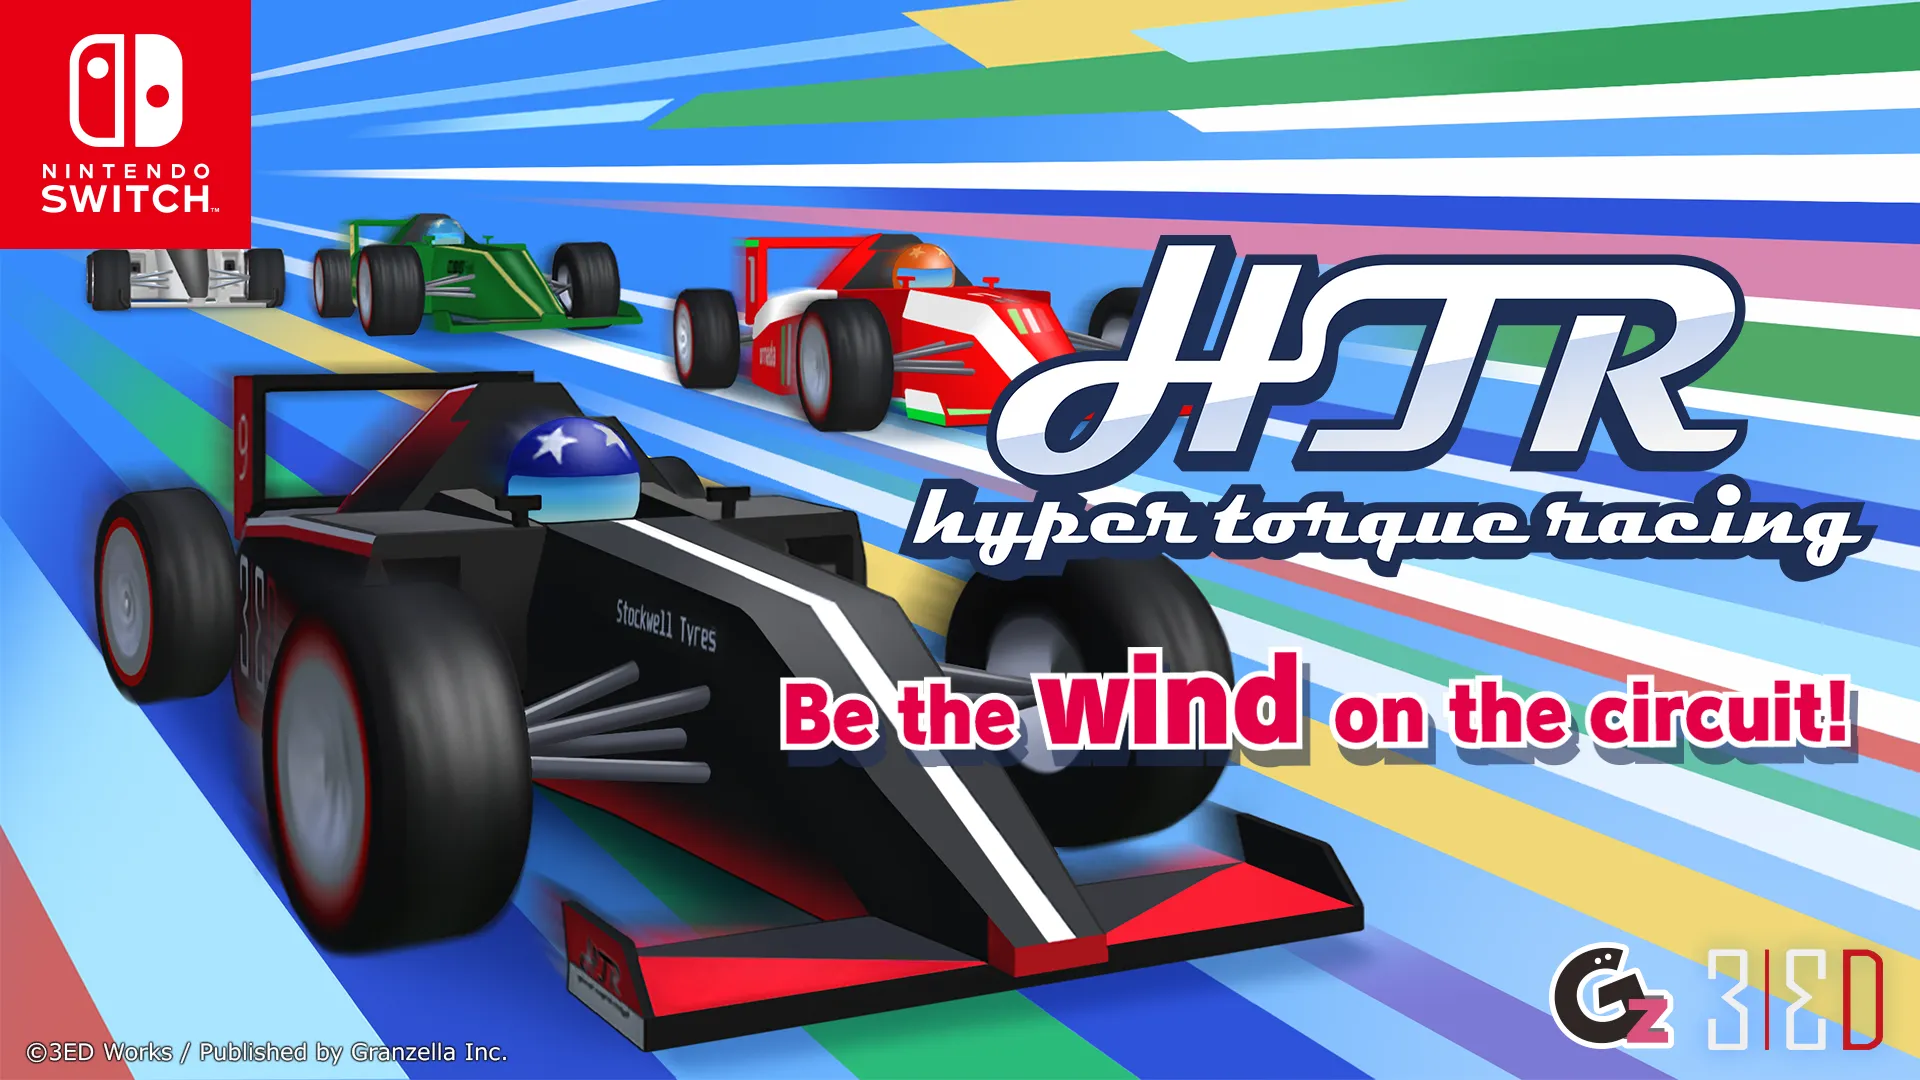 "Hyper Torque Racing", a racing game for Nintendo Switch, has been released!